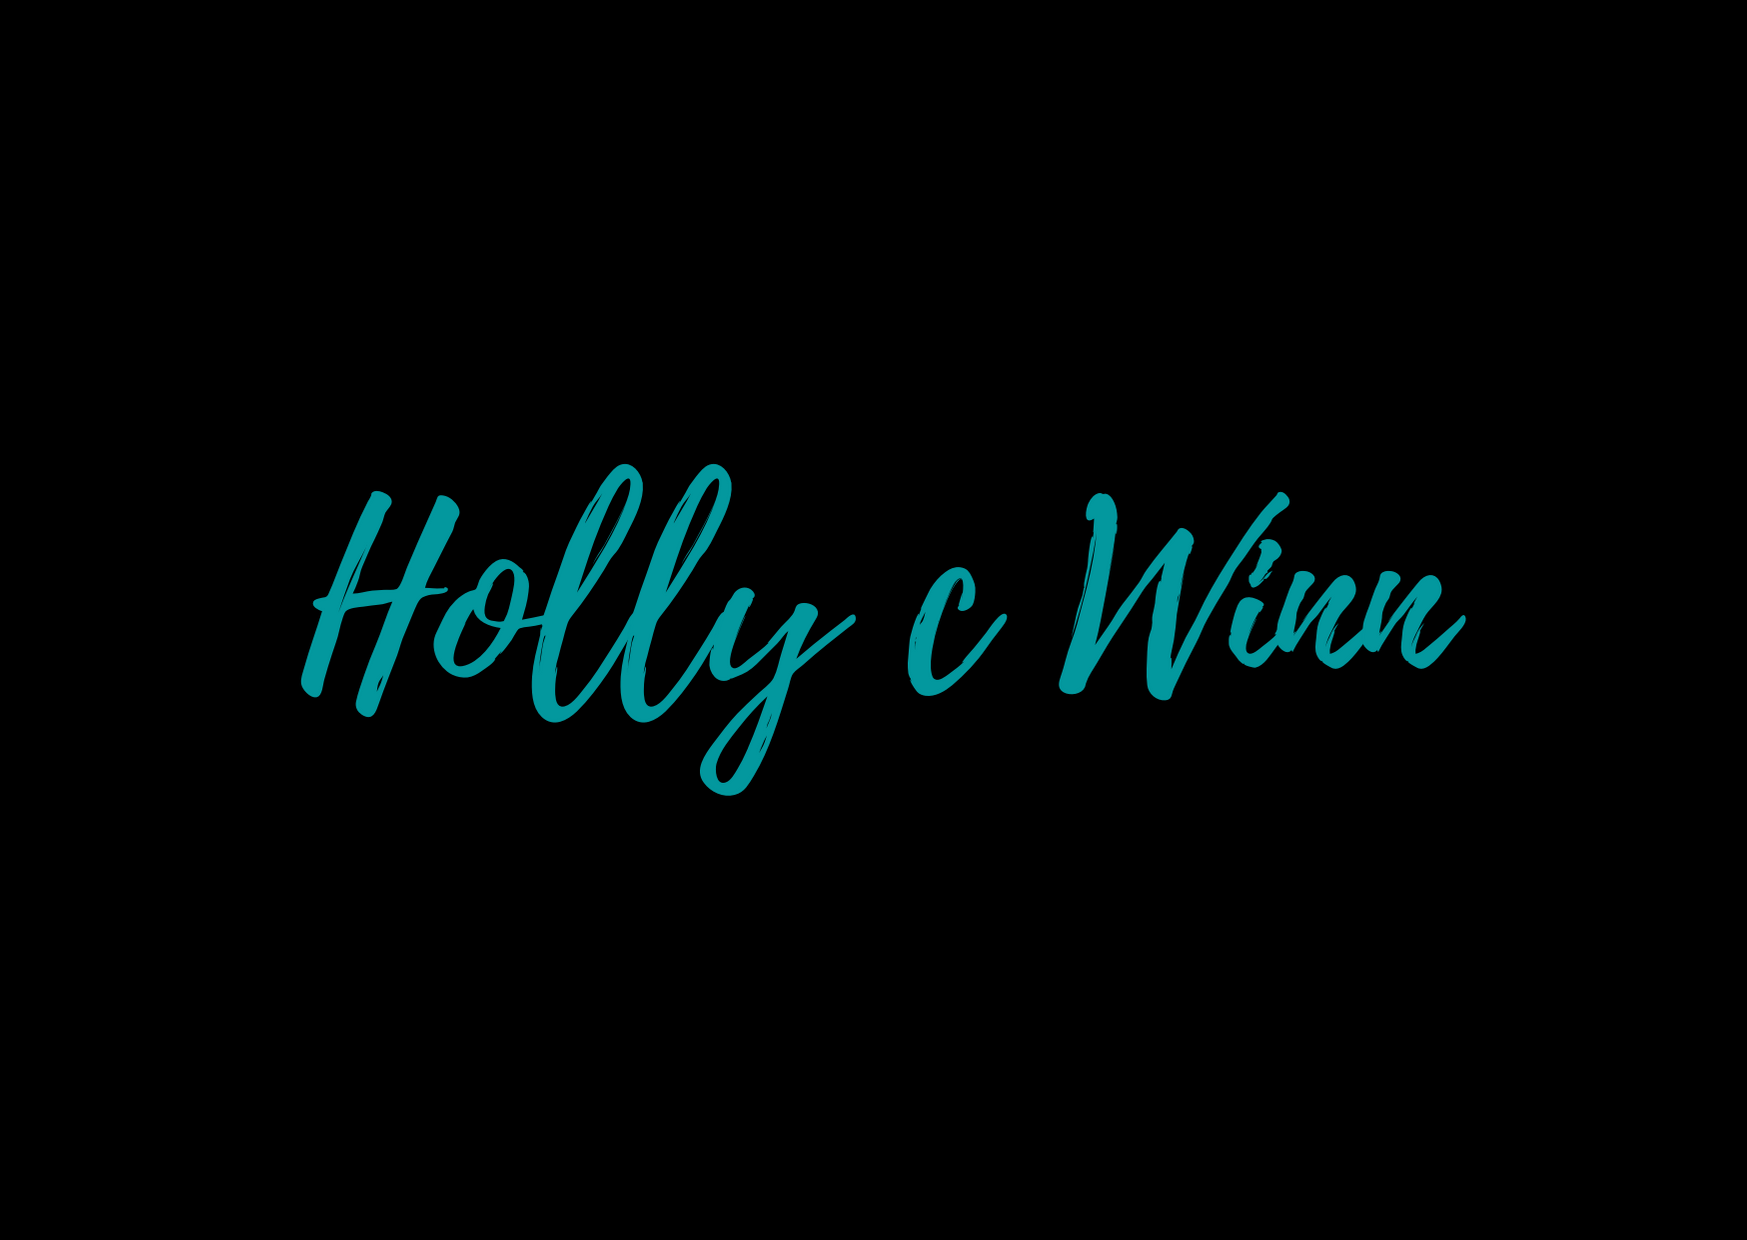 Holly C. Winn's Portfolio Website